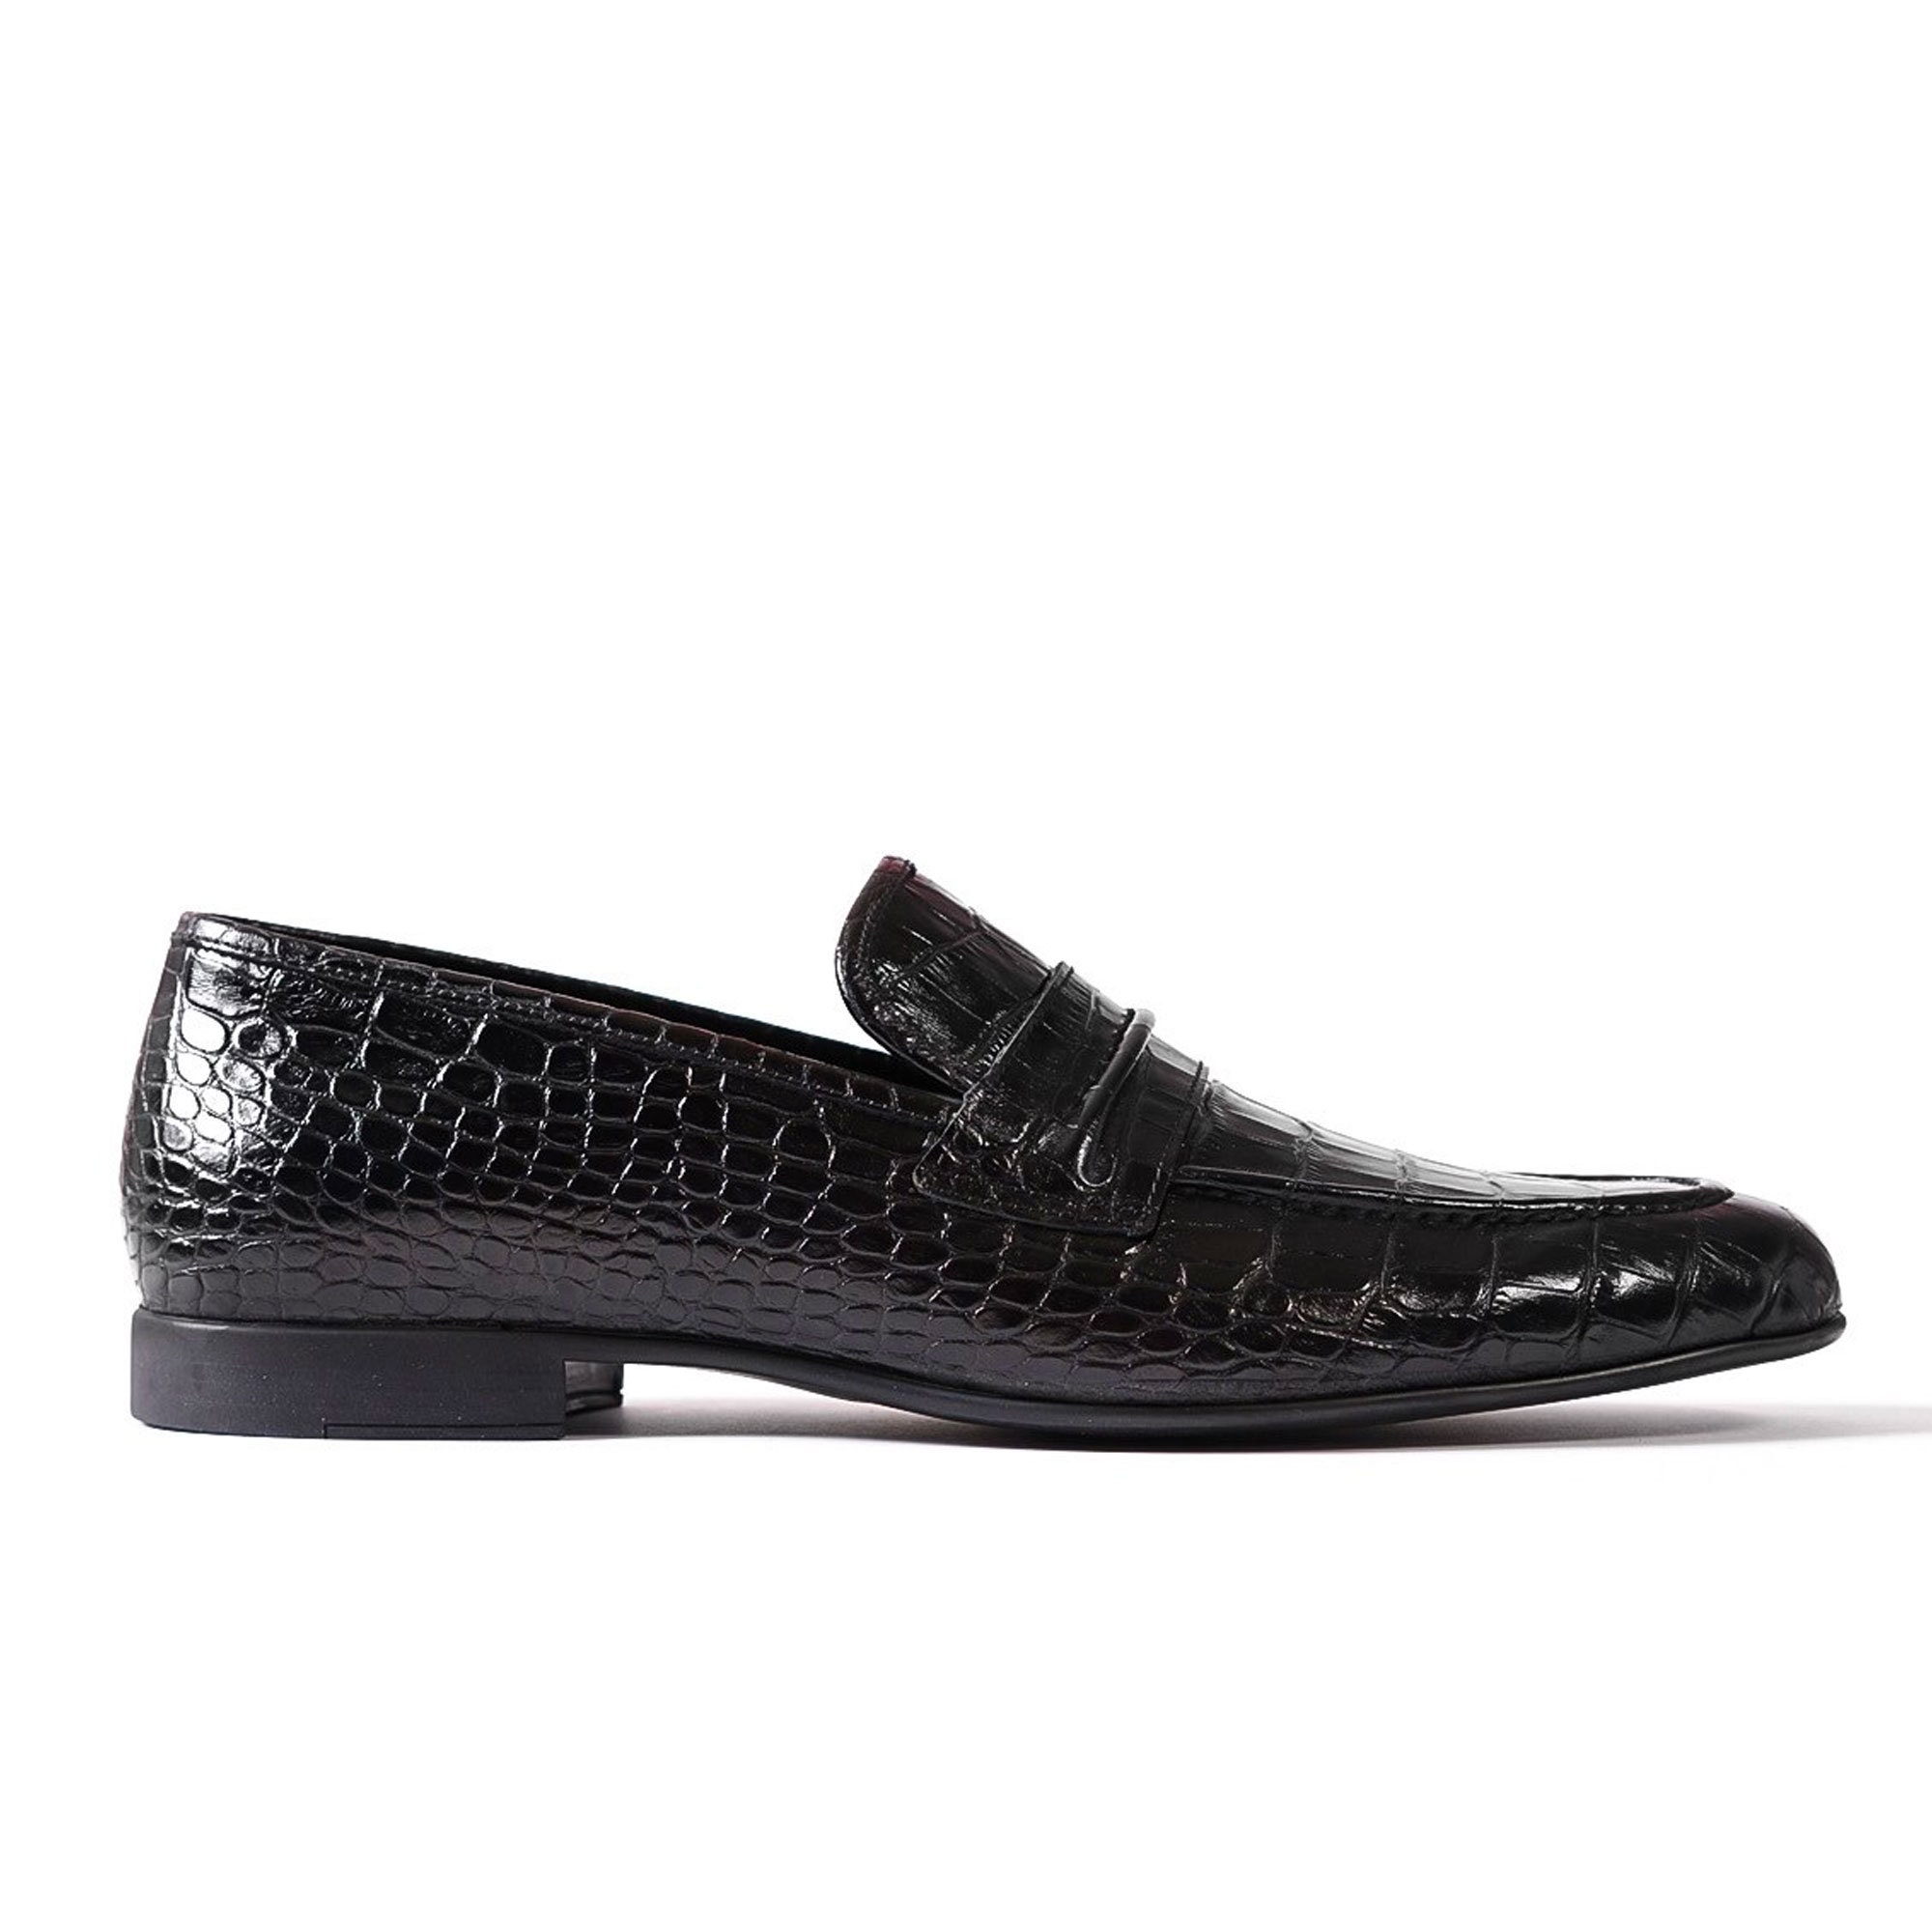 Fantasie Black Crocodile Patterned Genuine Leather Classic Men's ...